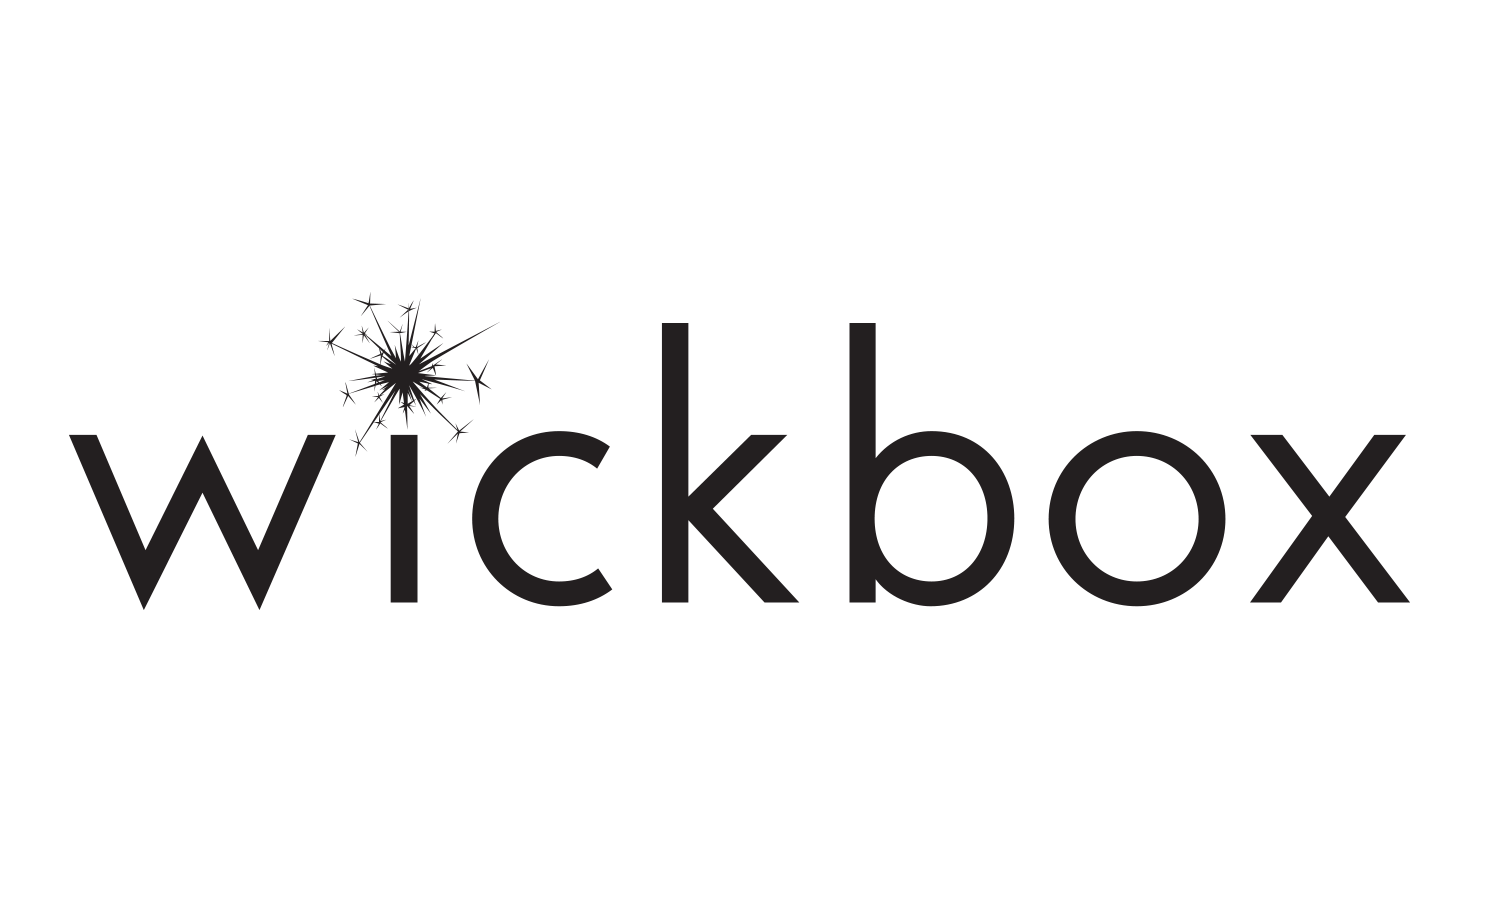 Wickbox